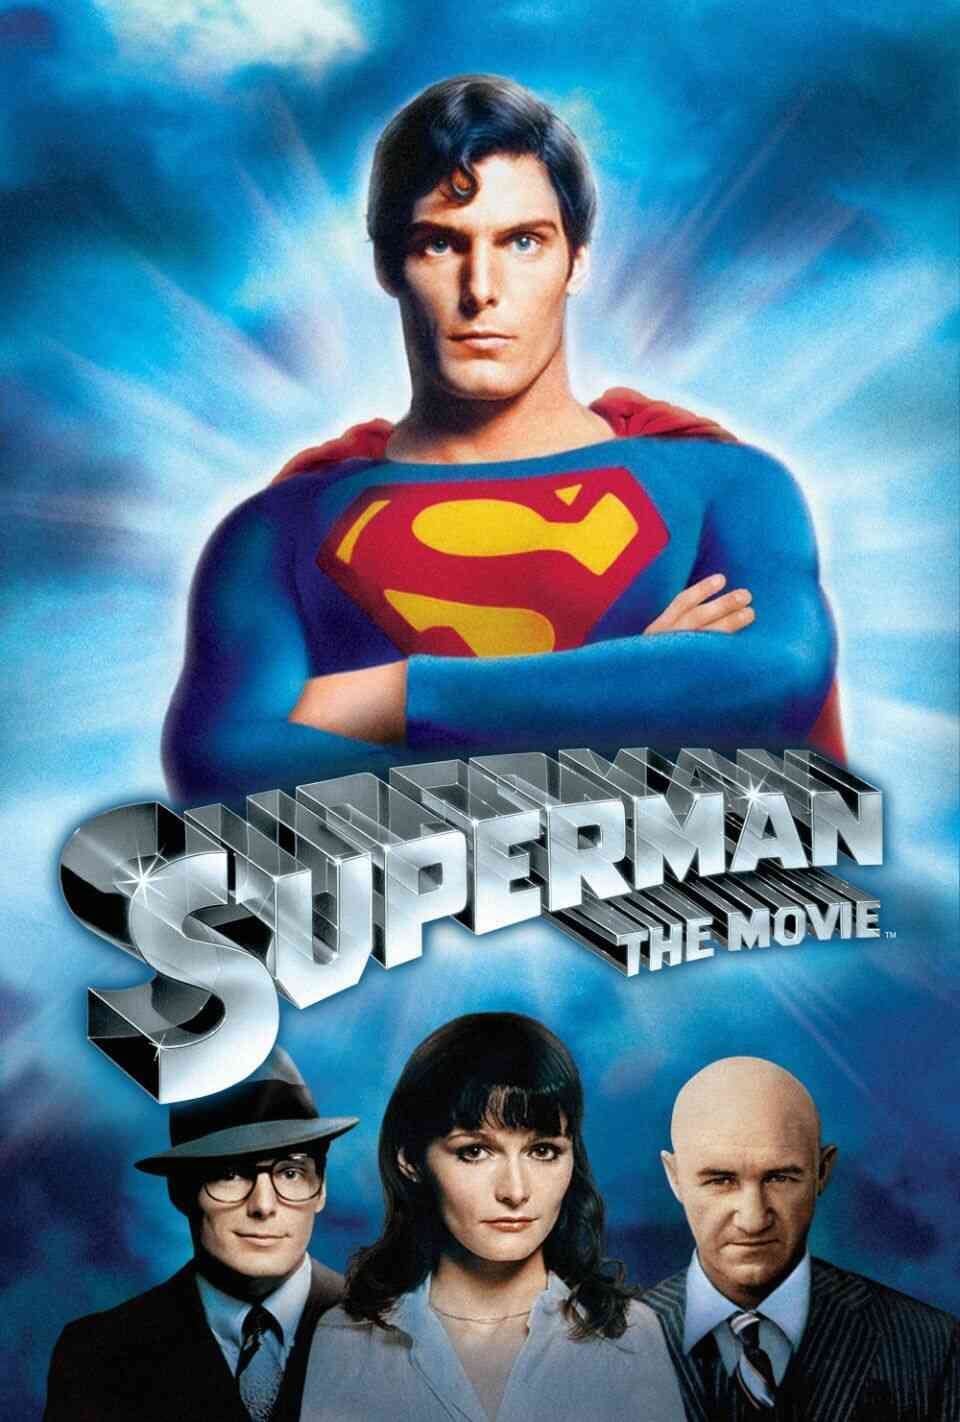 Read Superman screenplay (poster)